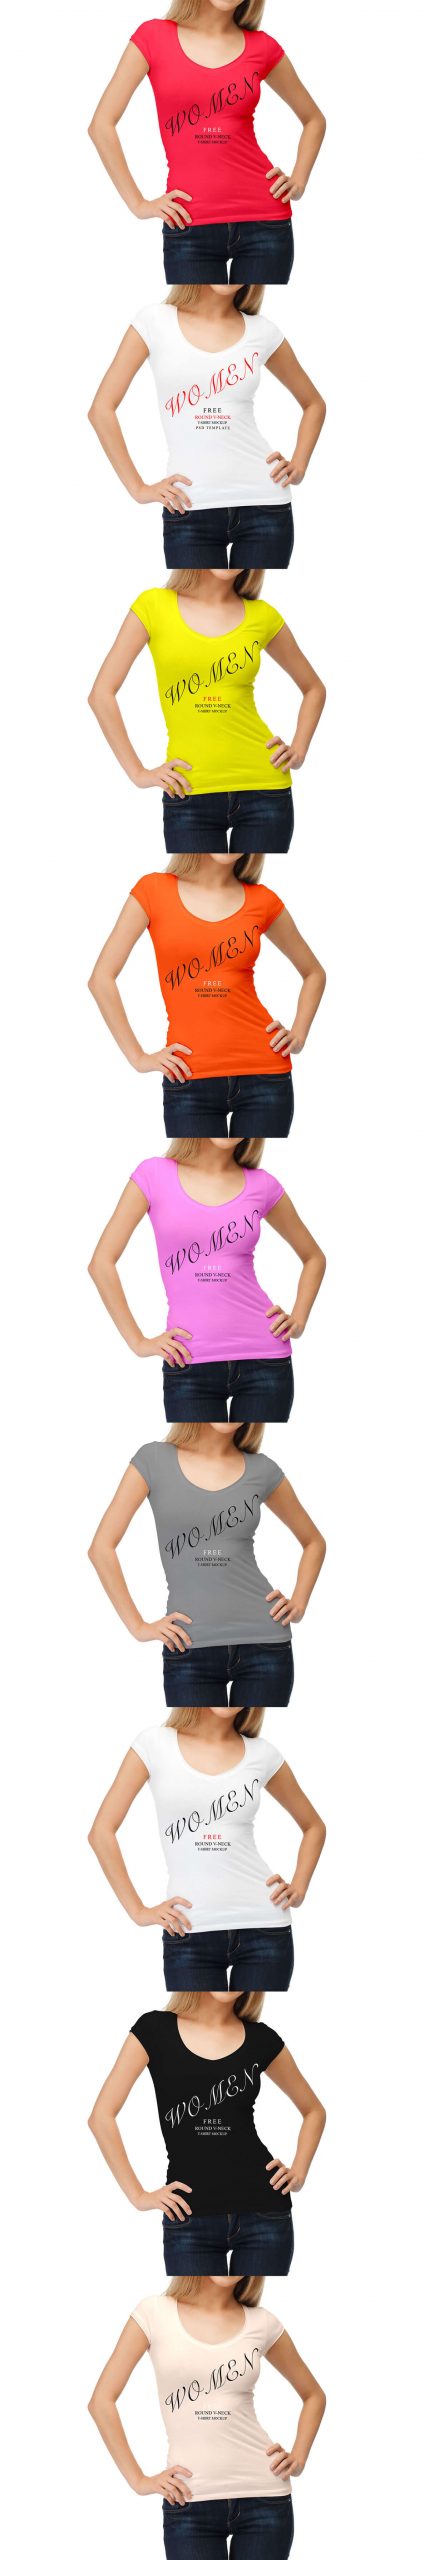 Women T-Shirt Mockup Free Download